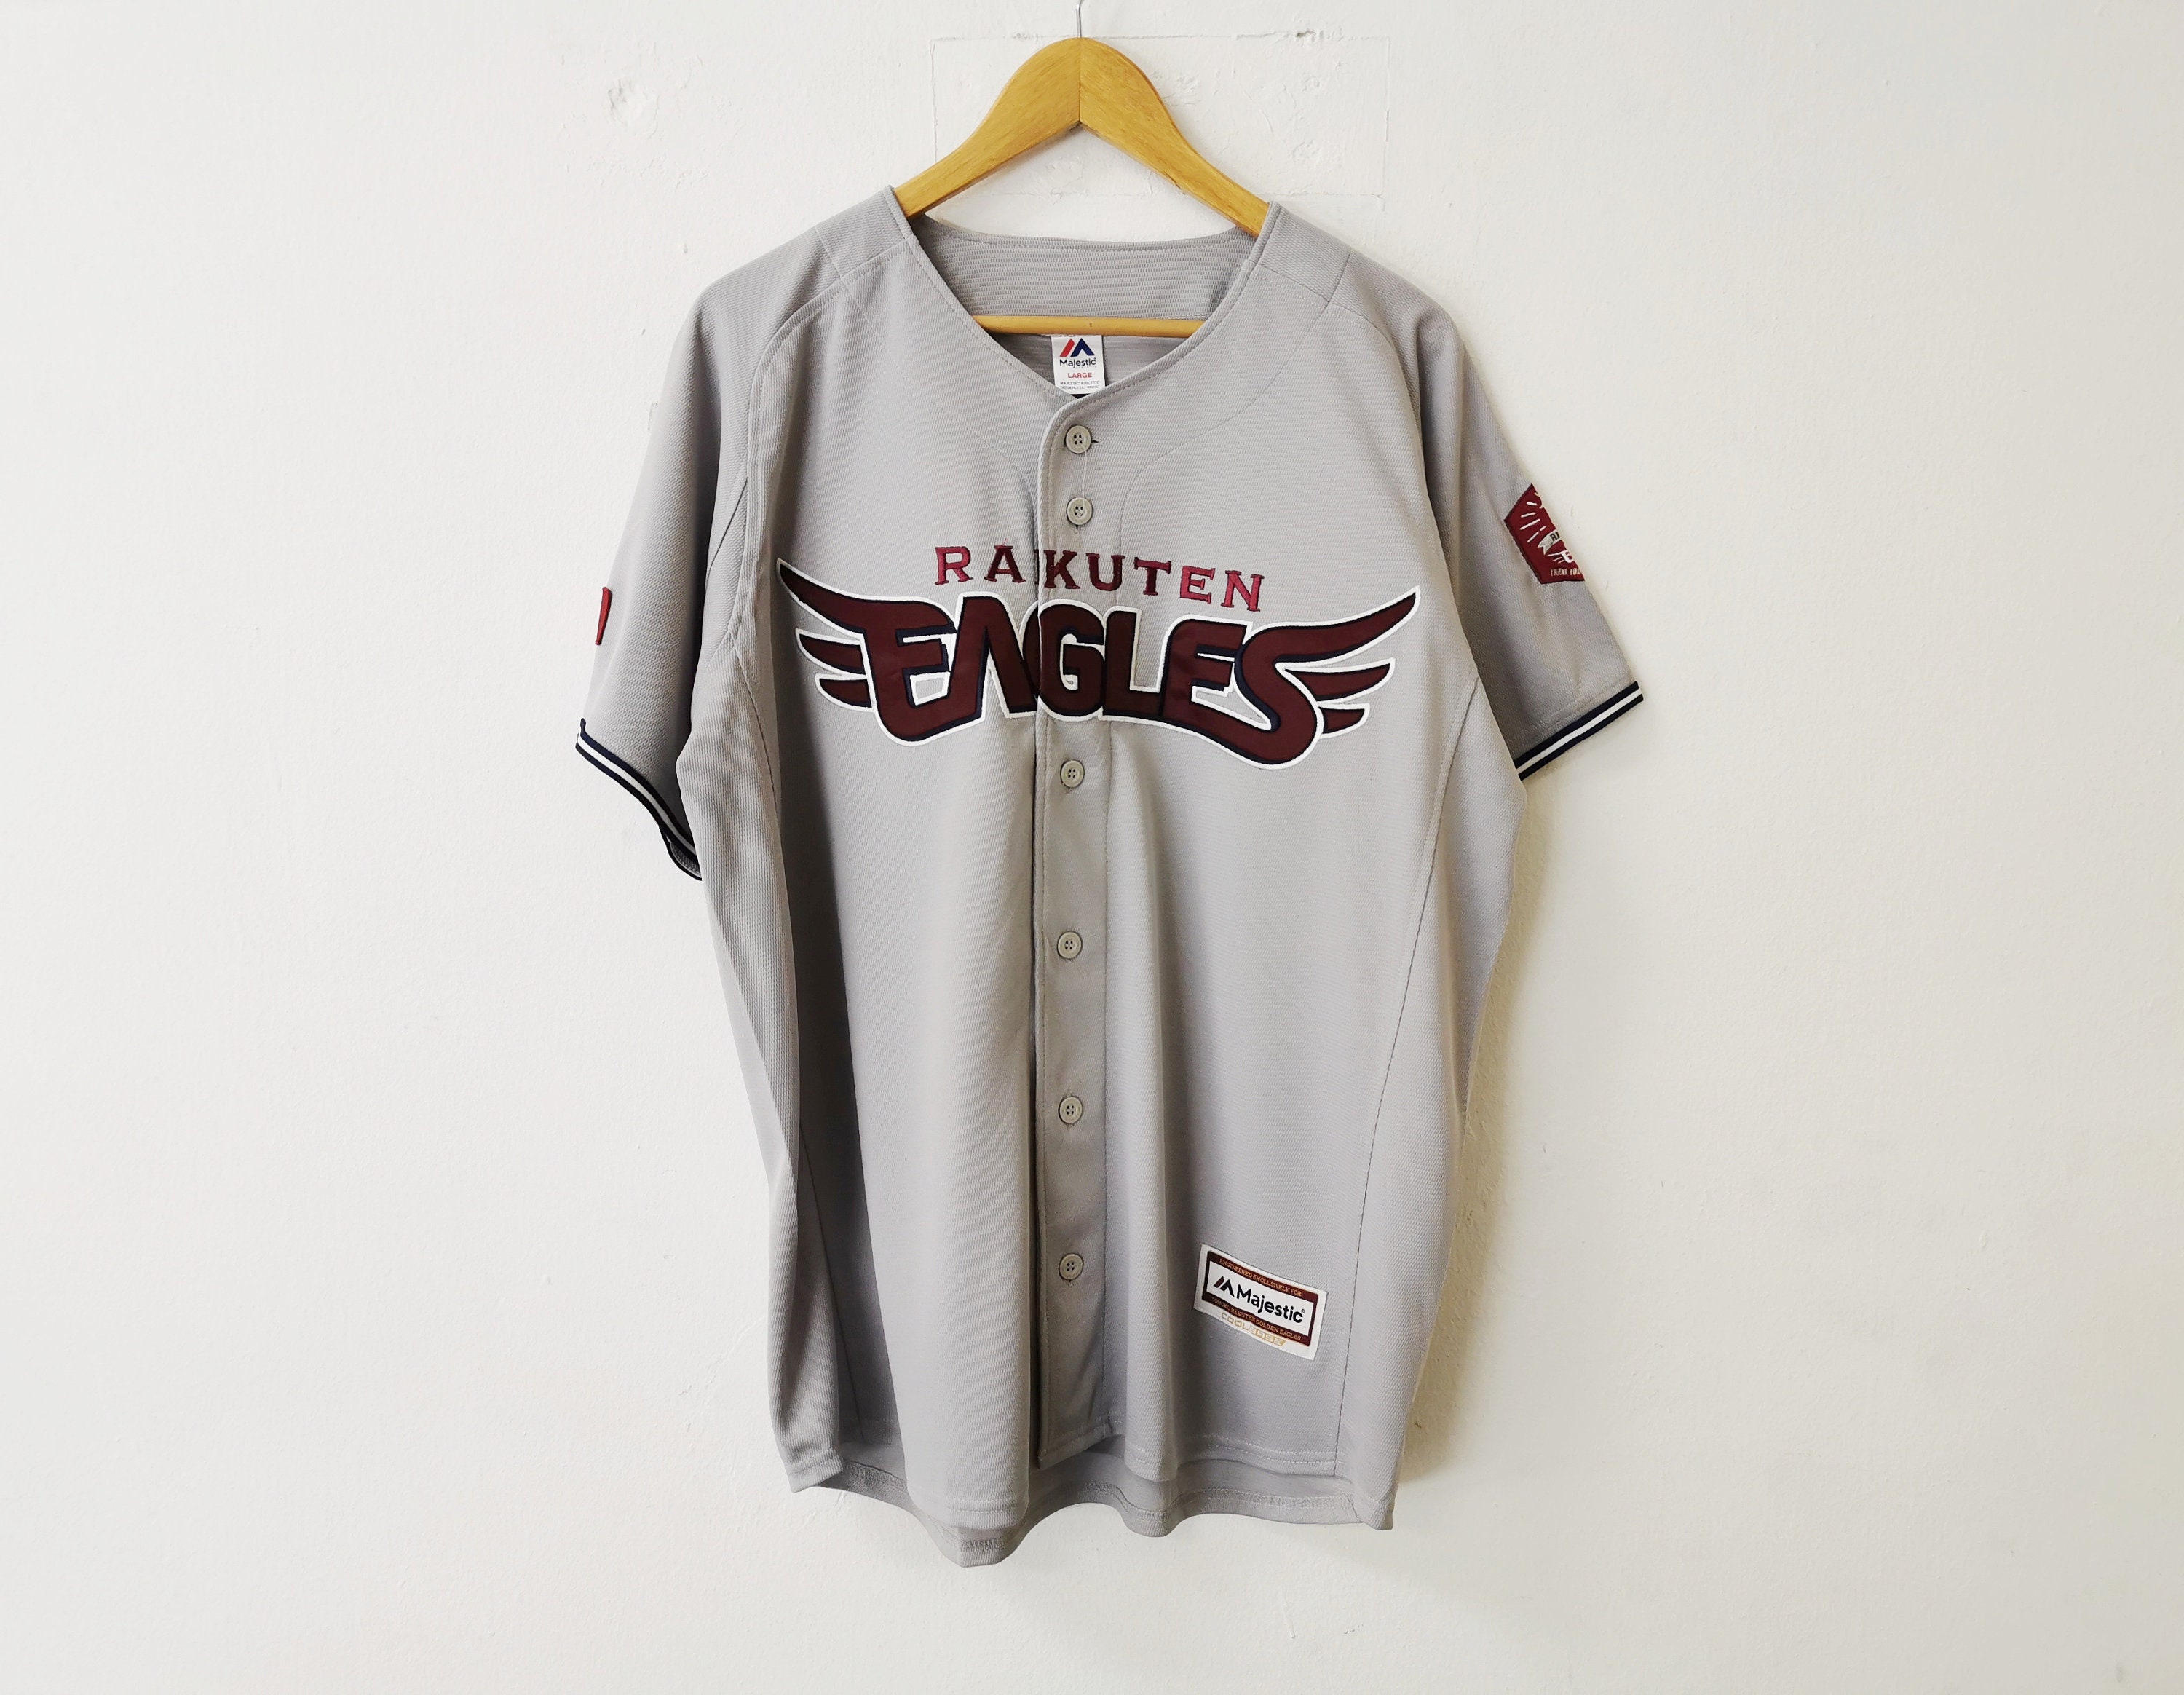 InPersona Rakuten Eagles Baseball Shirt Eagles Baseball Jersey Rakuten Eagles by Majestic 15th Anniversary Baseball Jersey Shirt Size L